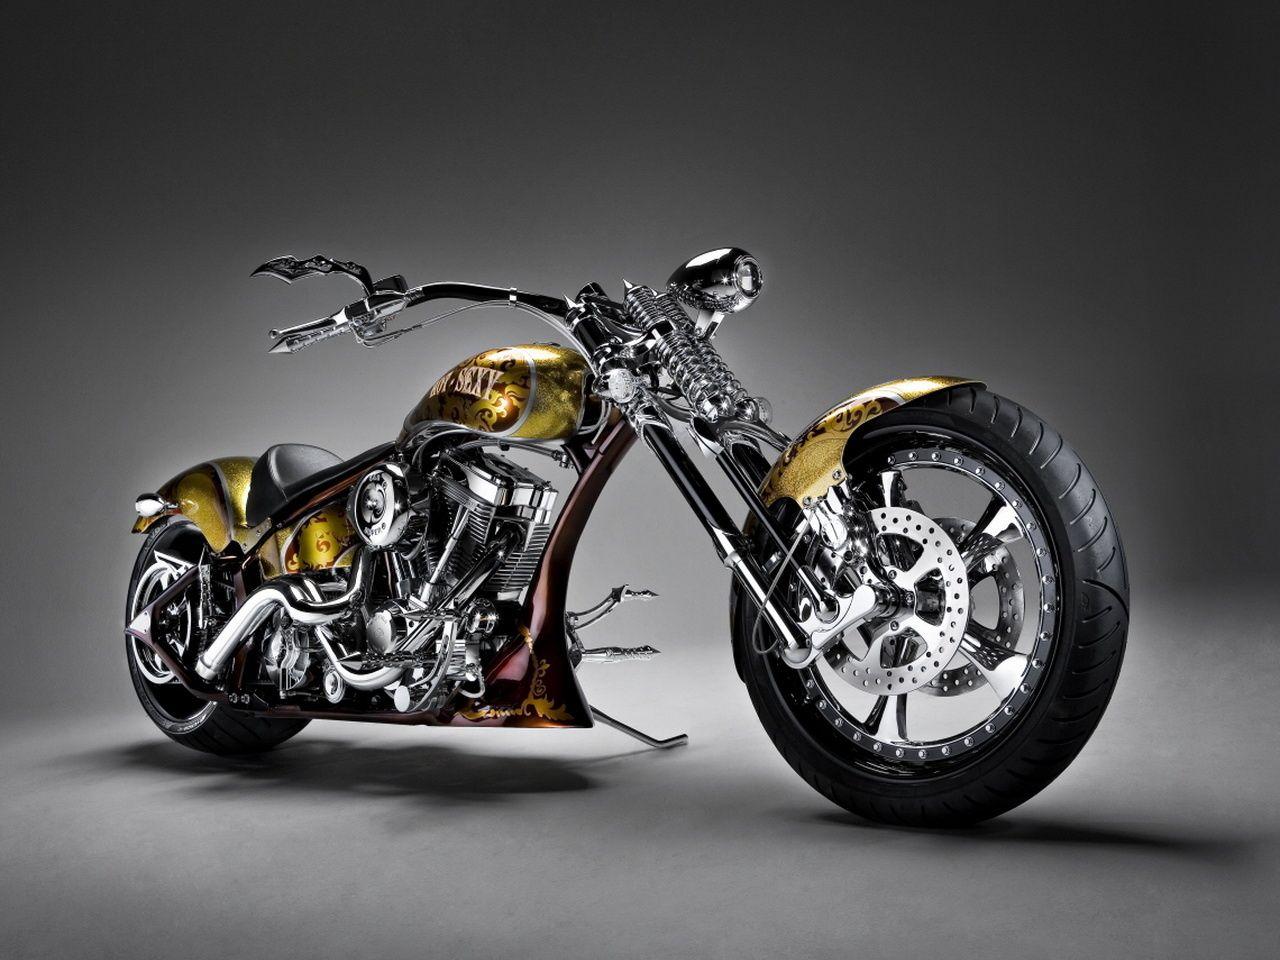 Best H D MC Image. Custom Bikes, Harley